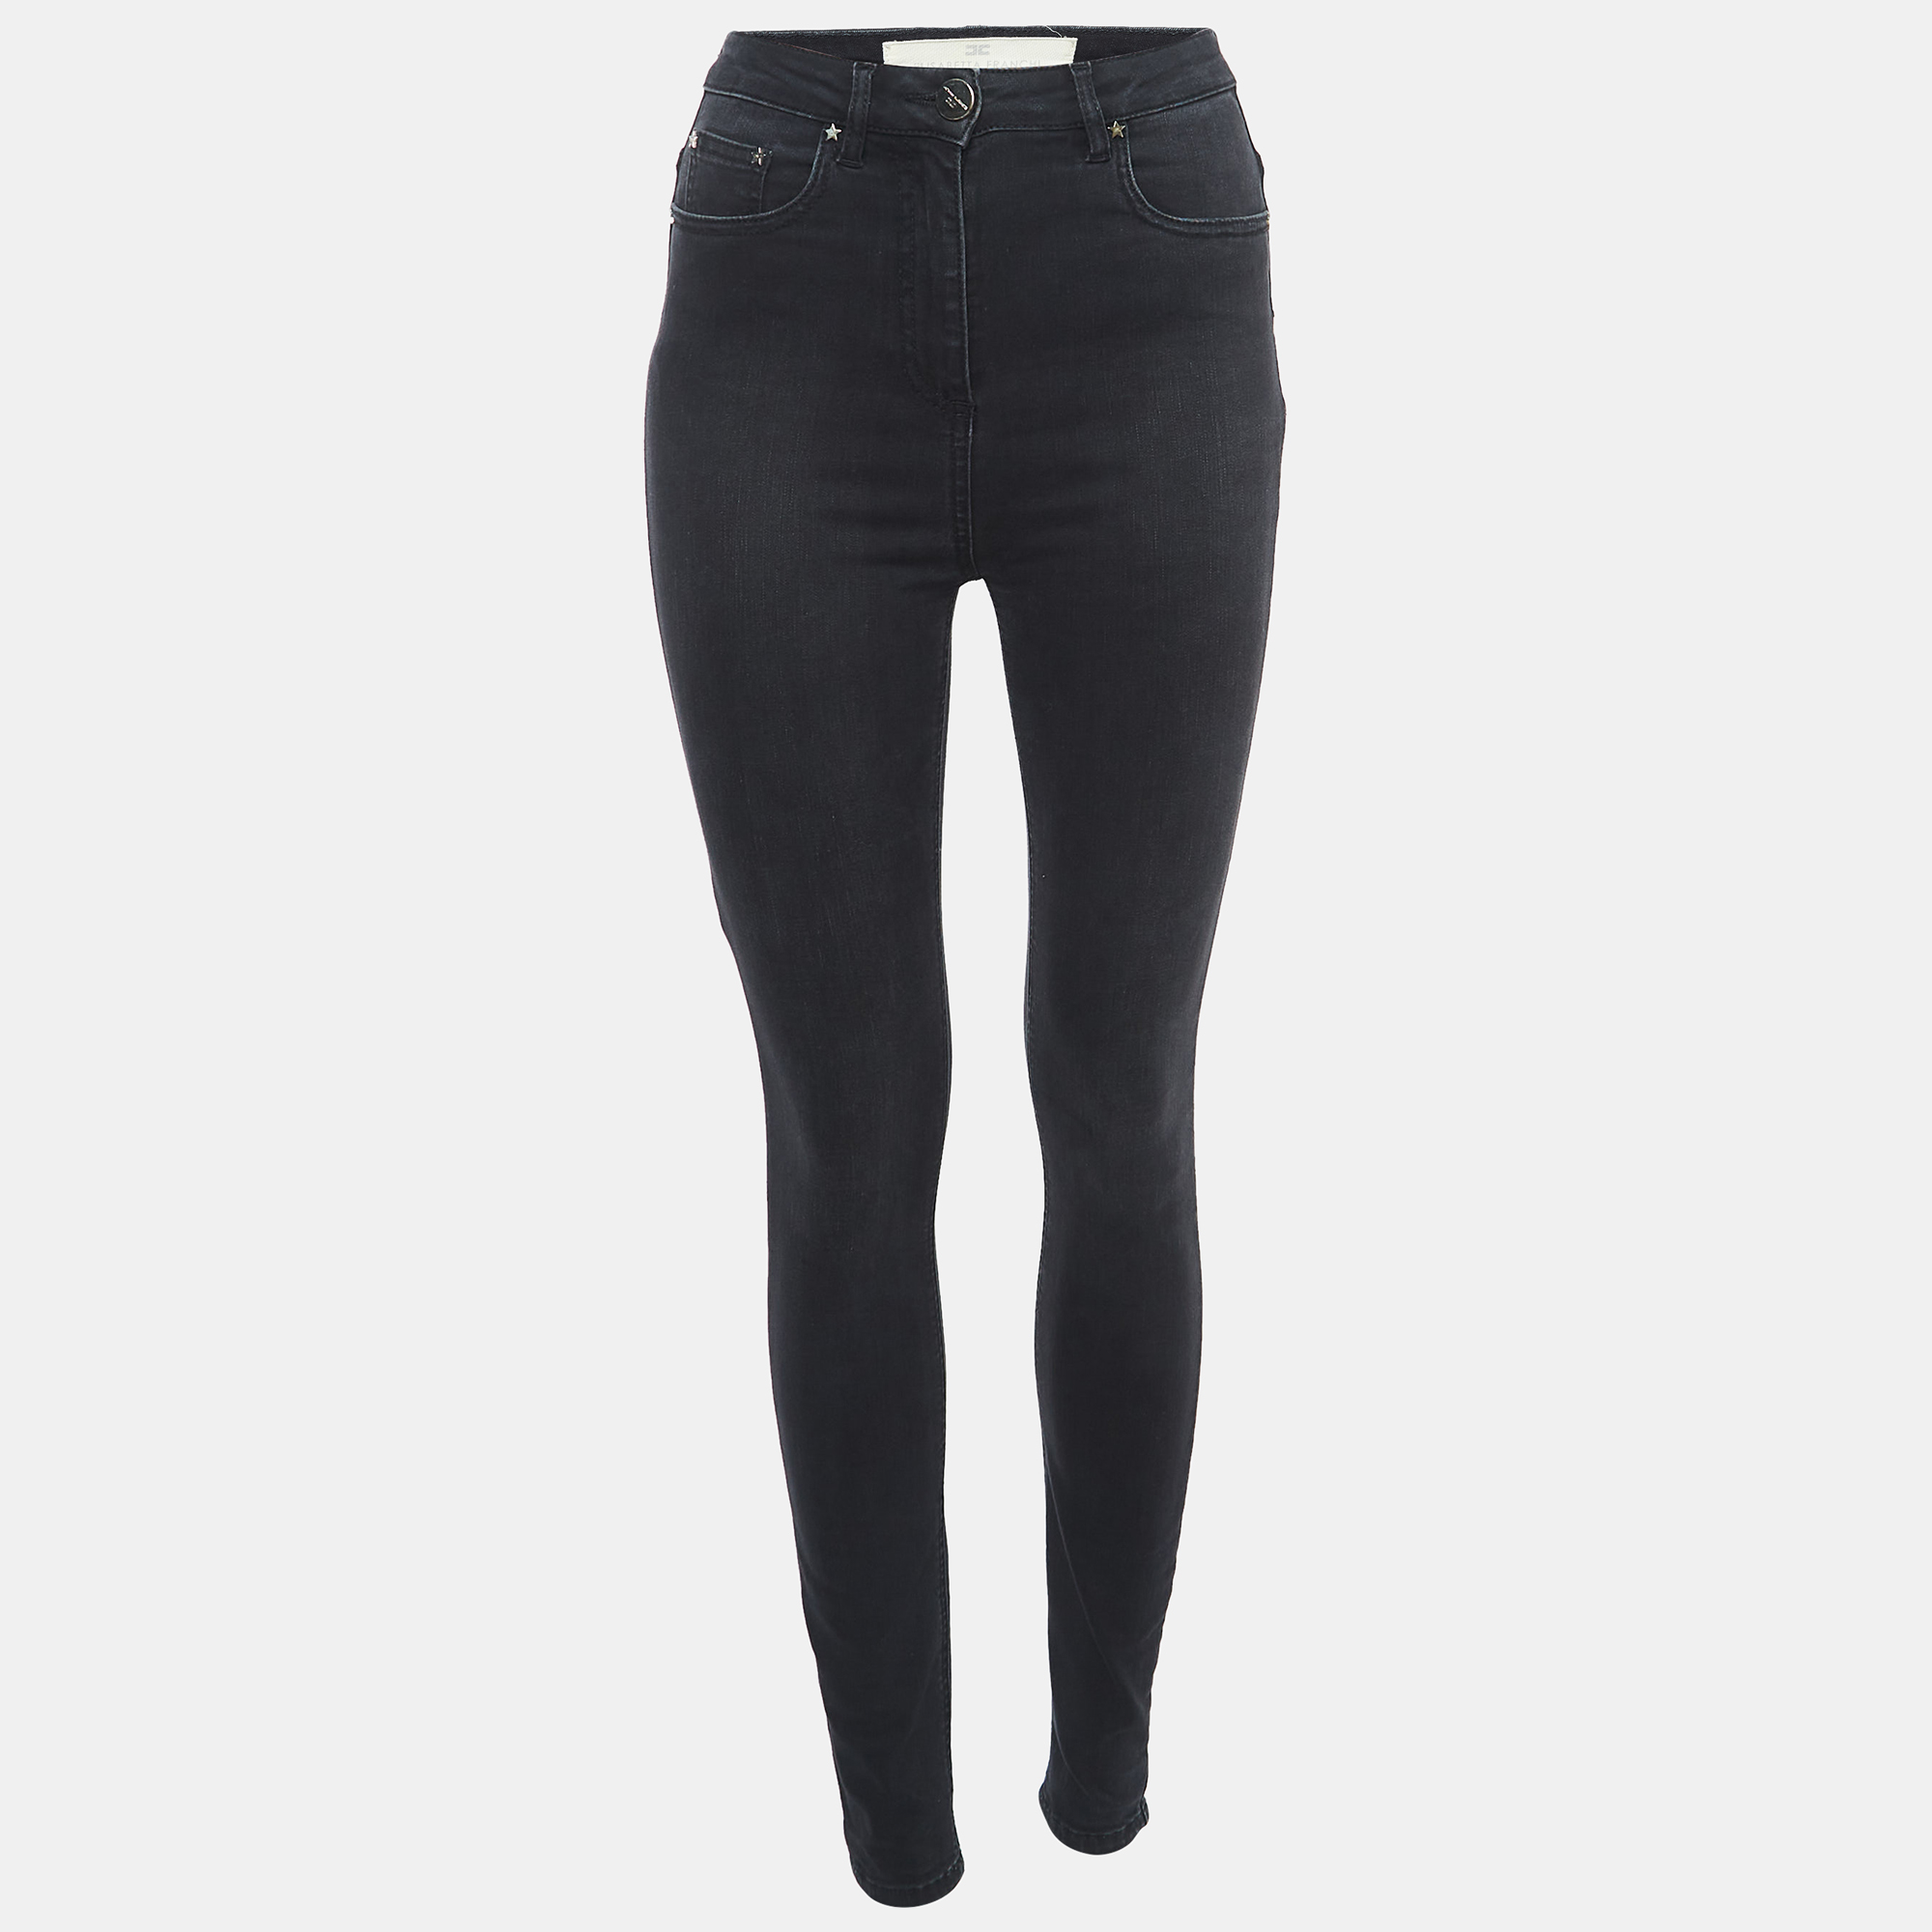 Pre-owned Elisabetta Franchi Charcoal Black Skinny Denim Jeans S Waist 26